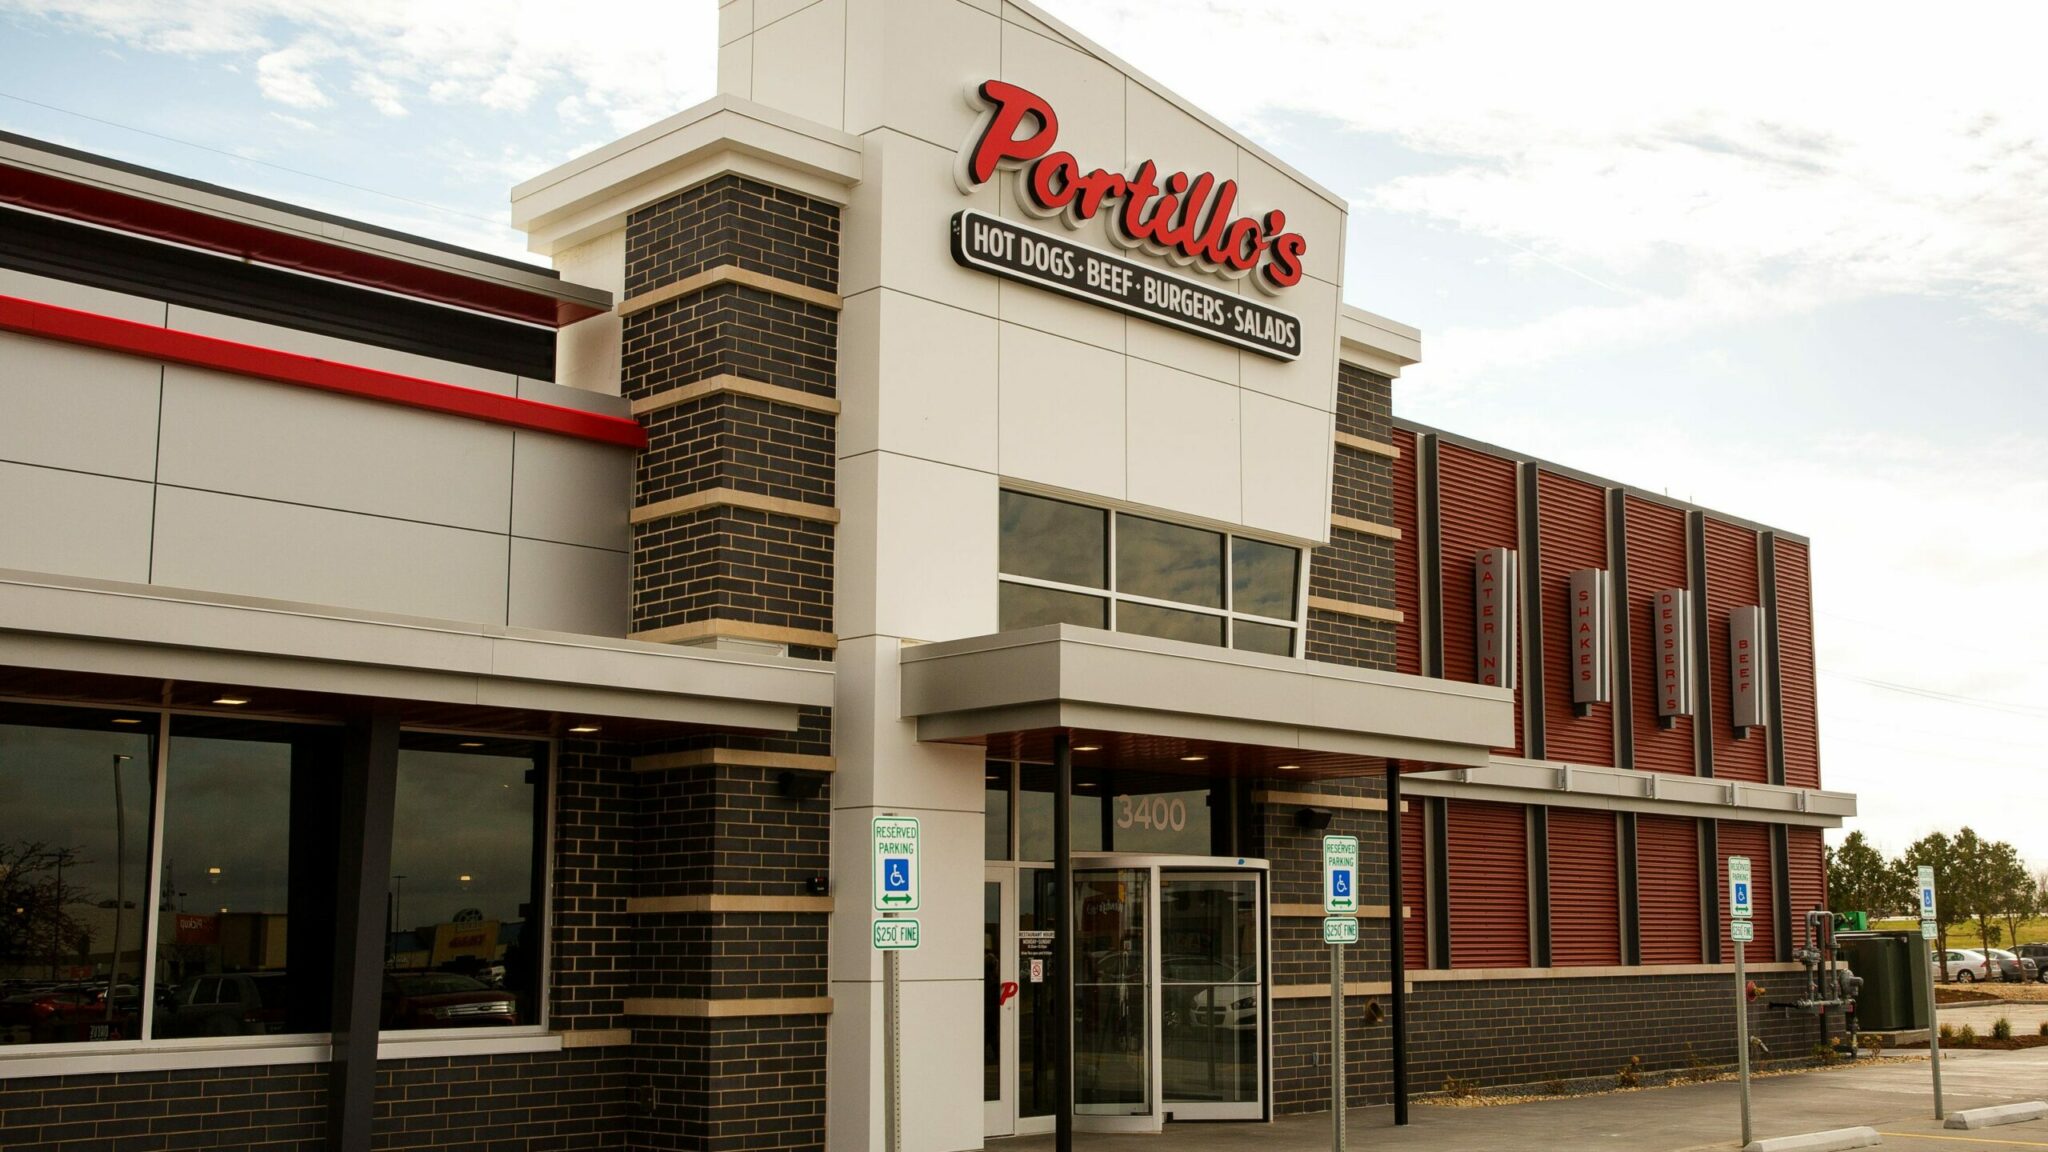 Portillo's Restaurant